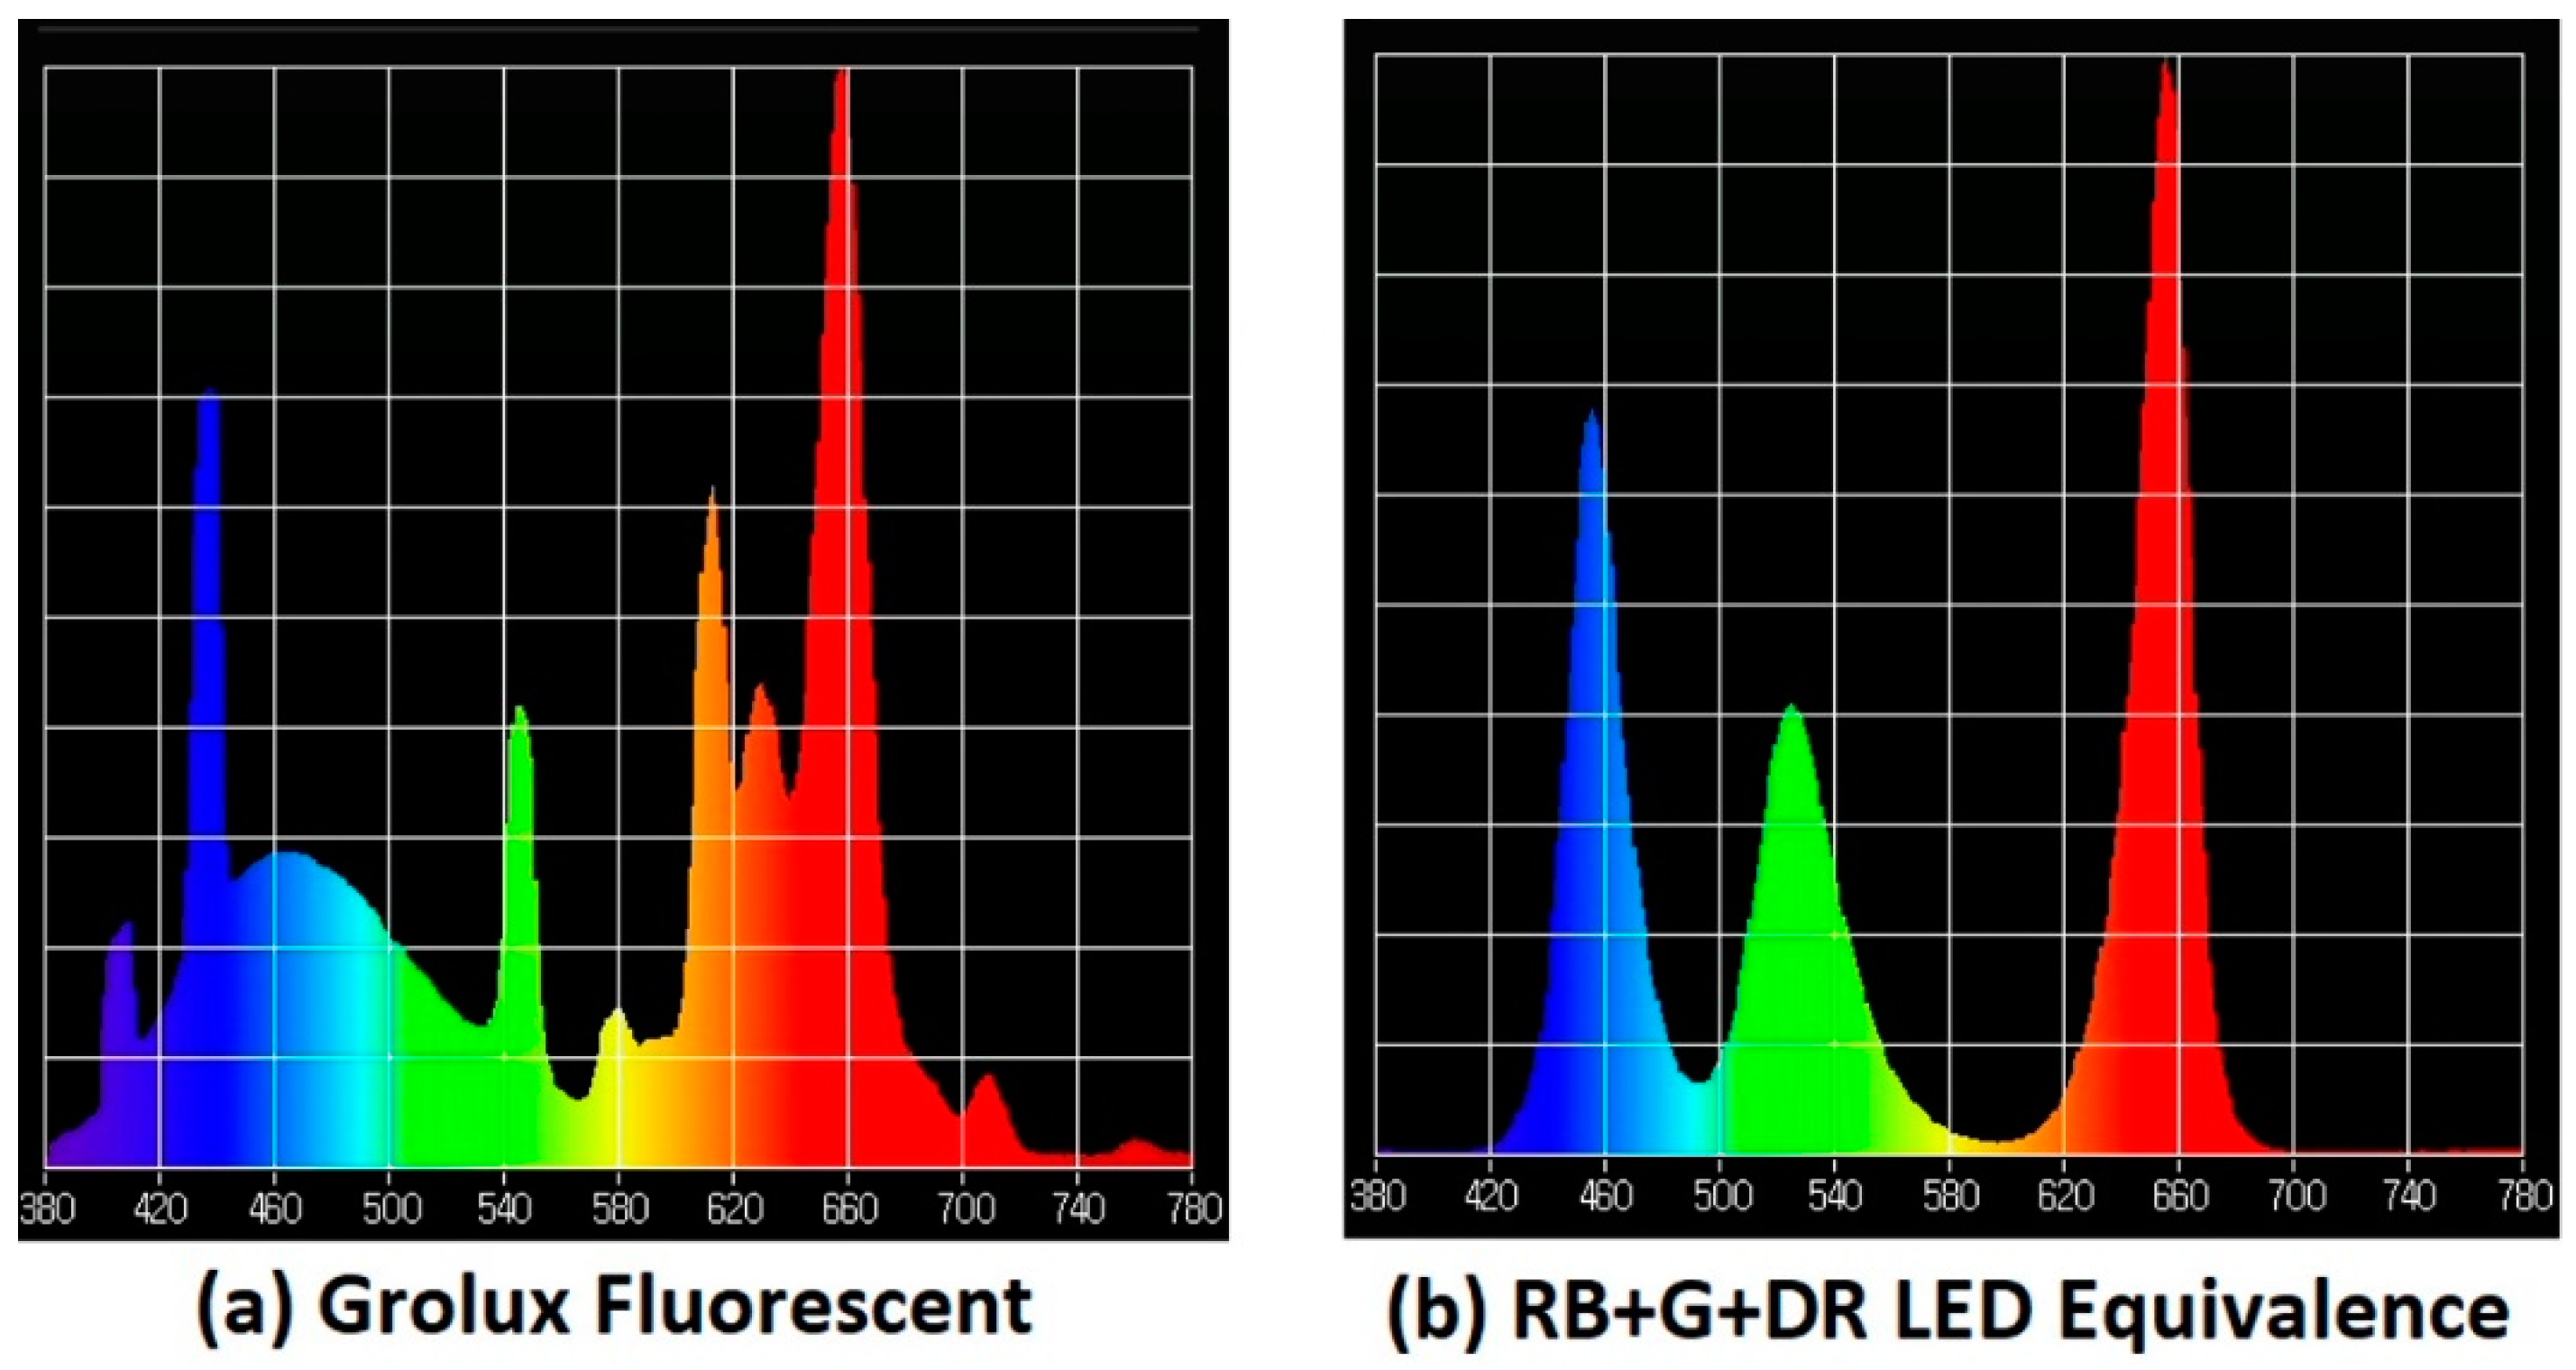 Tubes fluorescents LED 150 cm • 200 lm/w Xtreme High Lumen